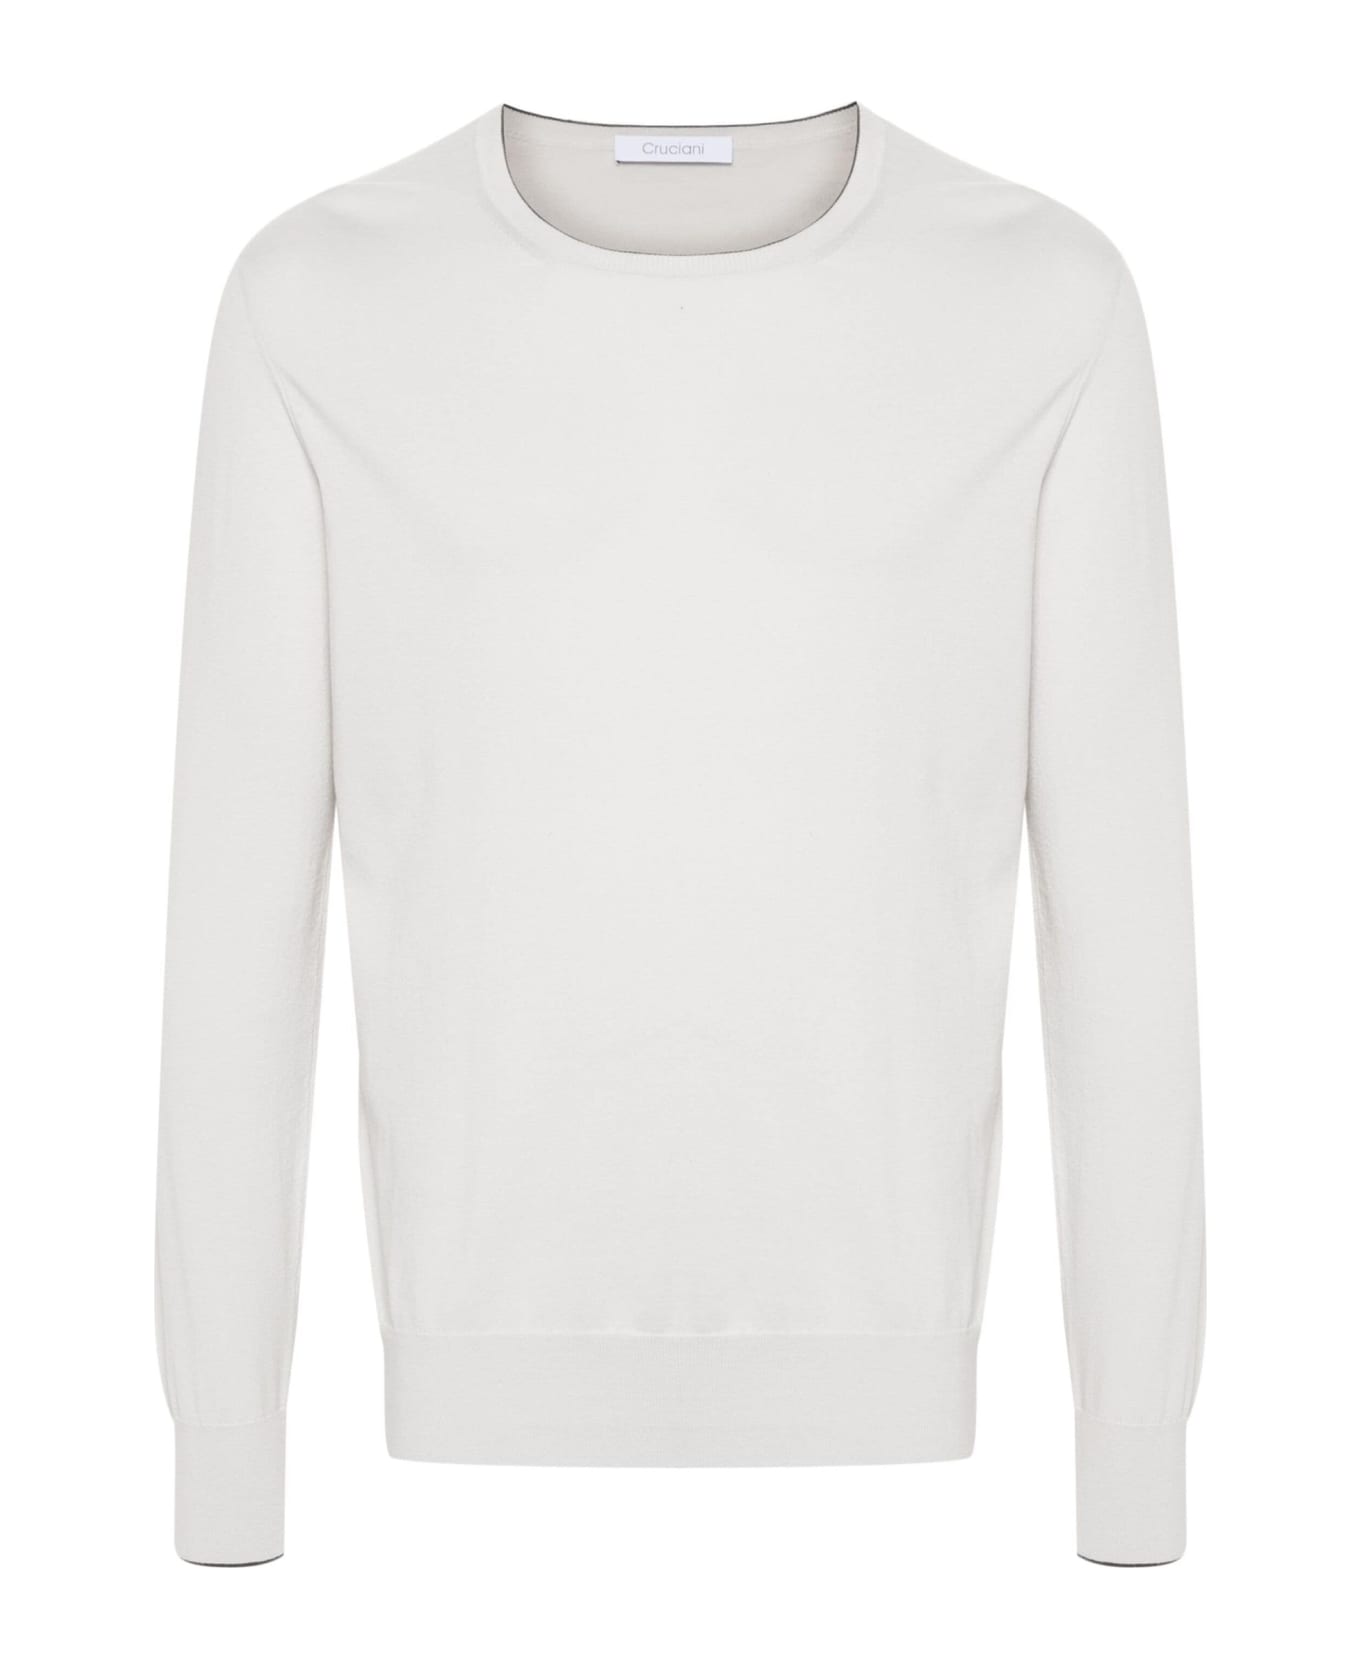 Cruciani Light Grey Cotton Sweater - Grey フリース